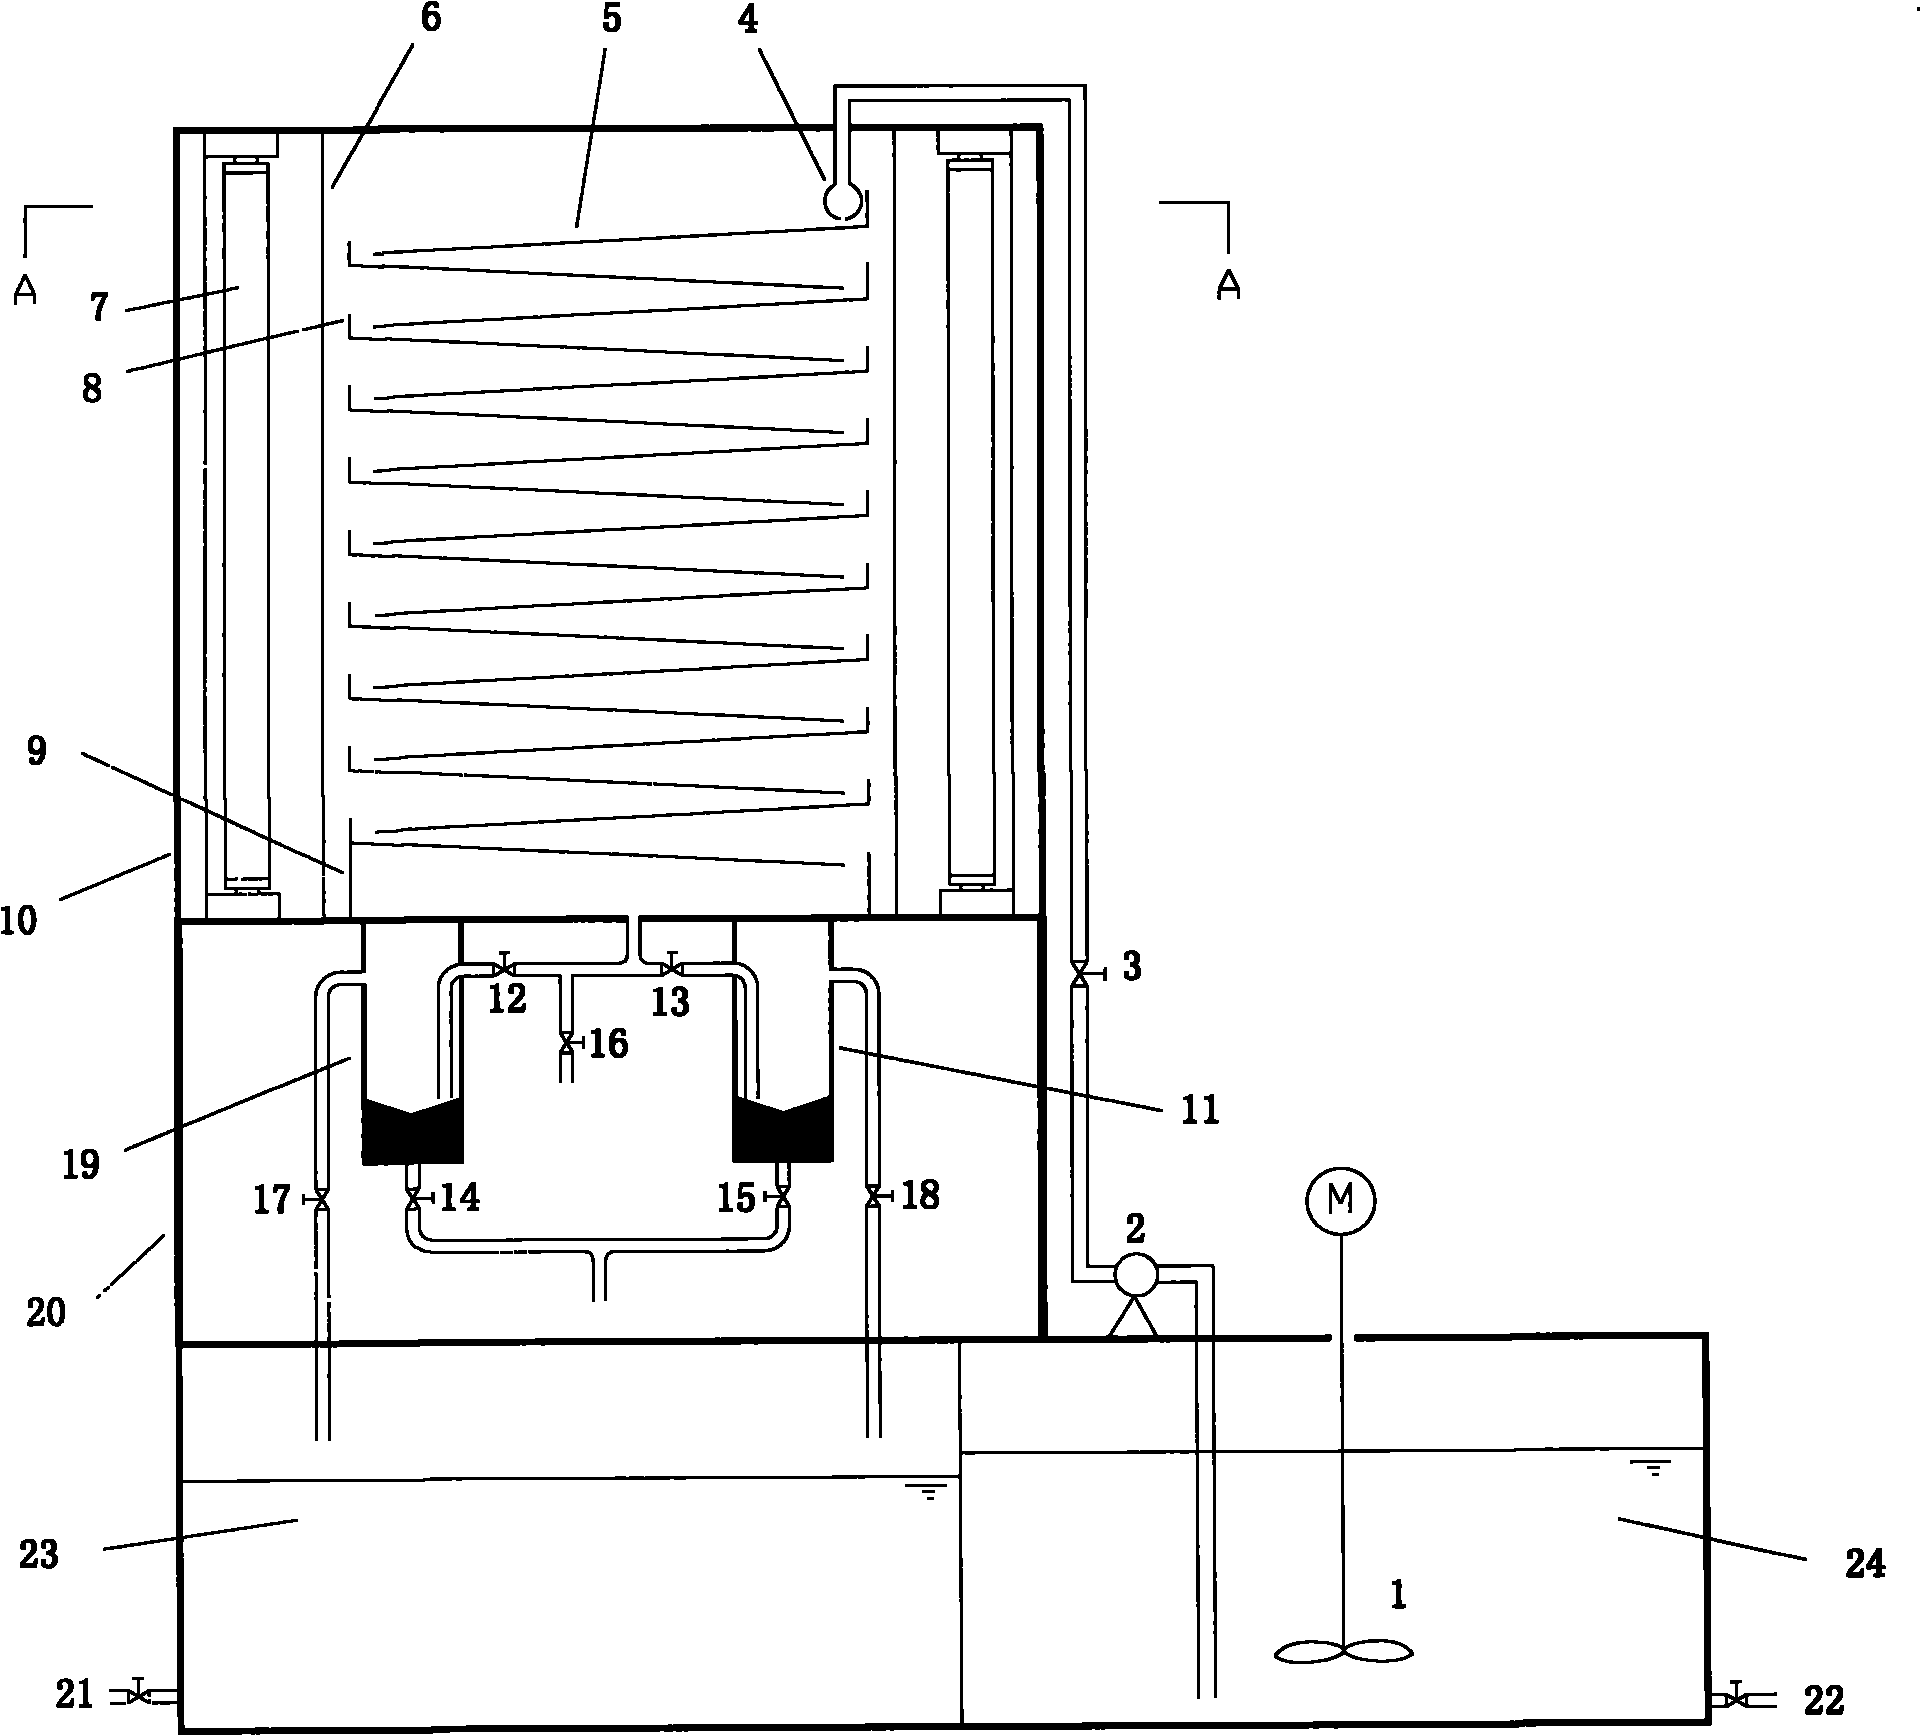 Sequencing batch photocatalytic reactor